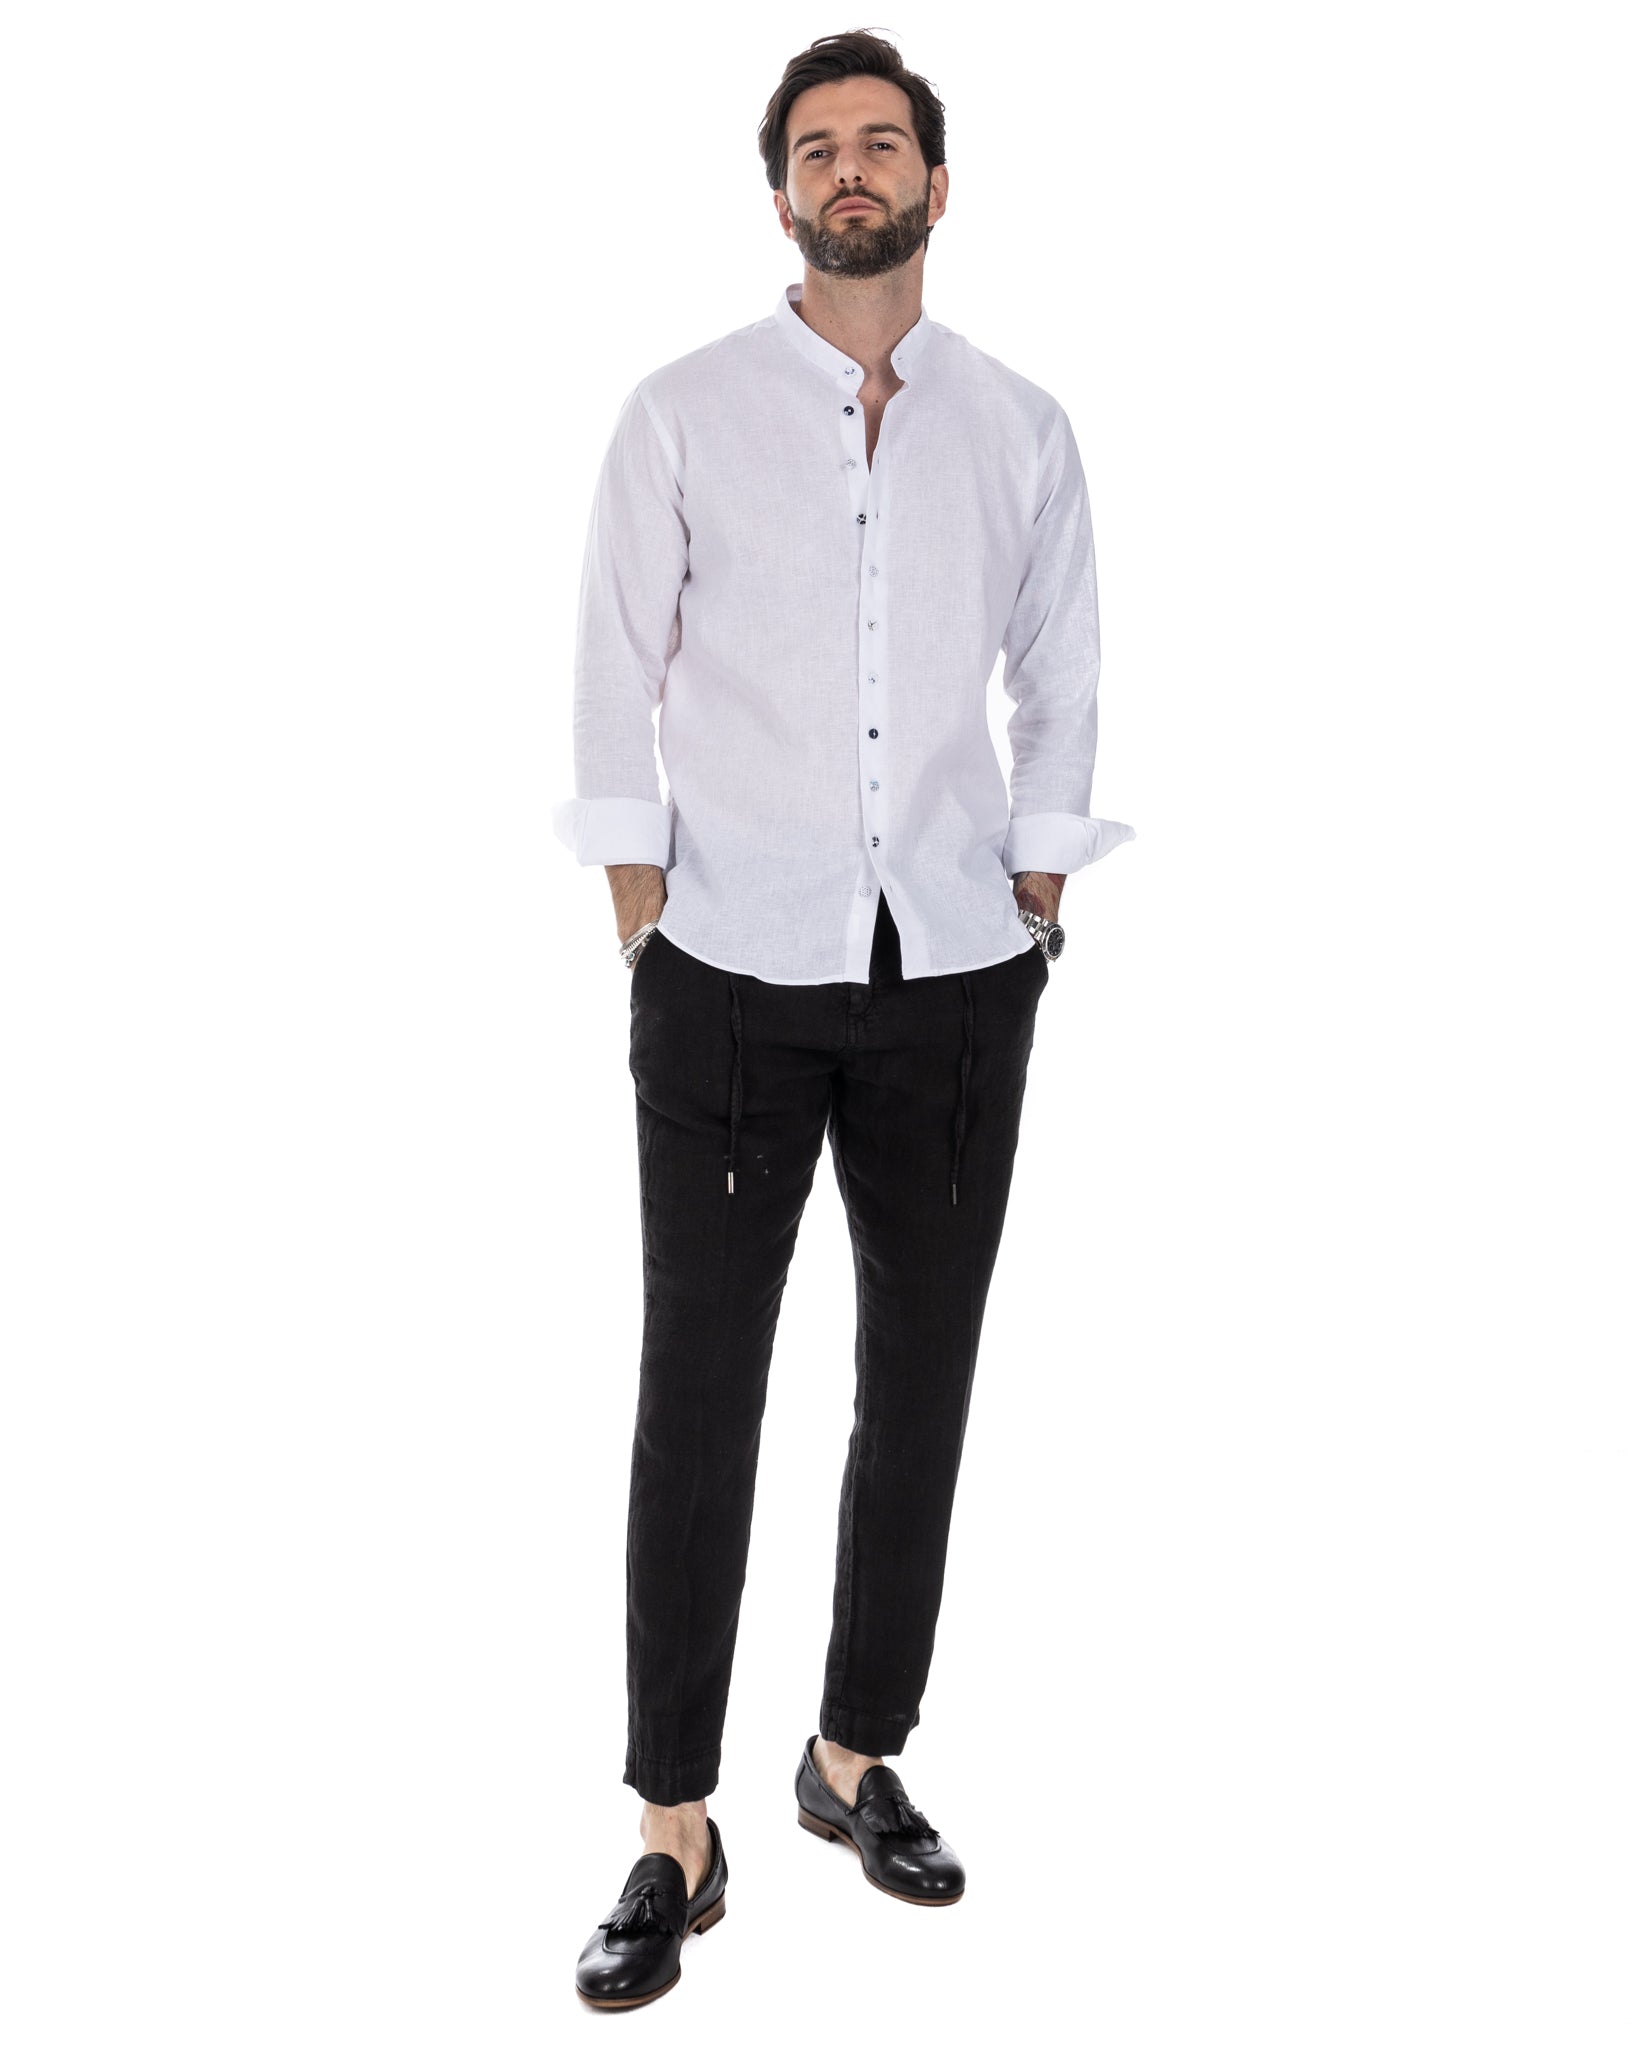 Gustave - pantalon en pur lin noir